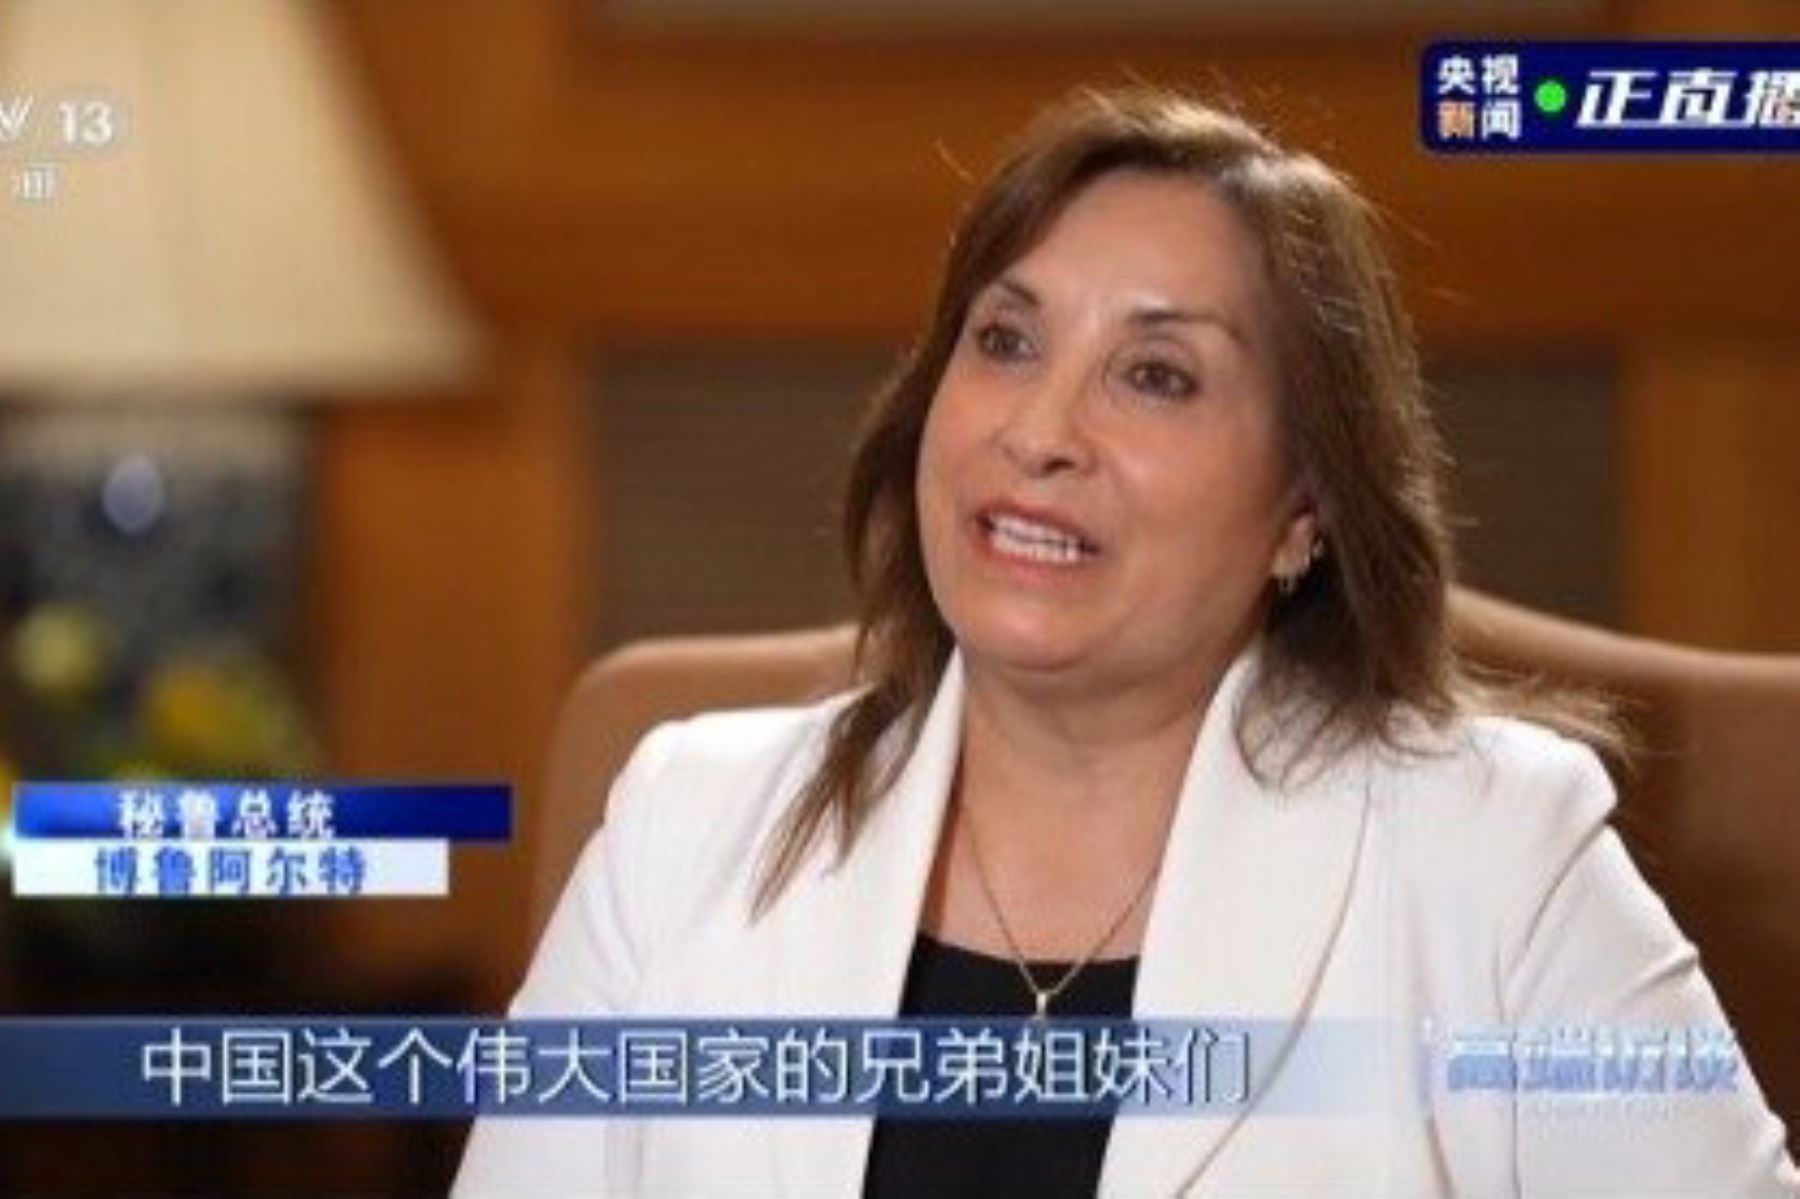 Photo: CCTV interview image